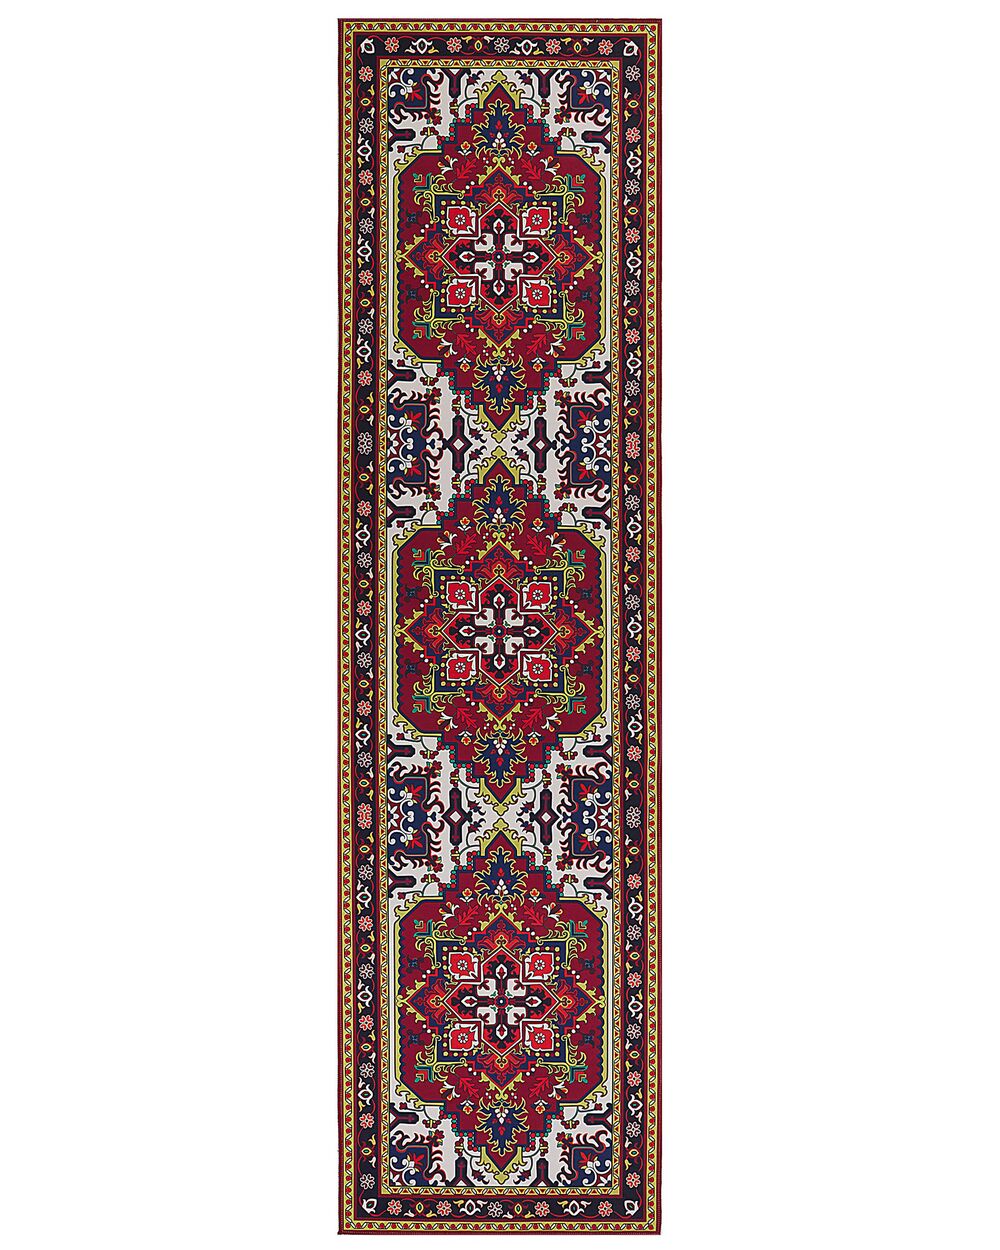 Teppich, Rot, 300 cm